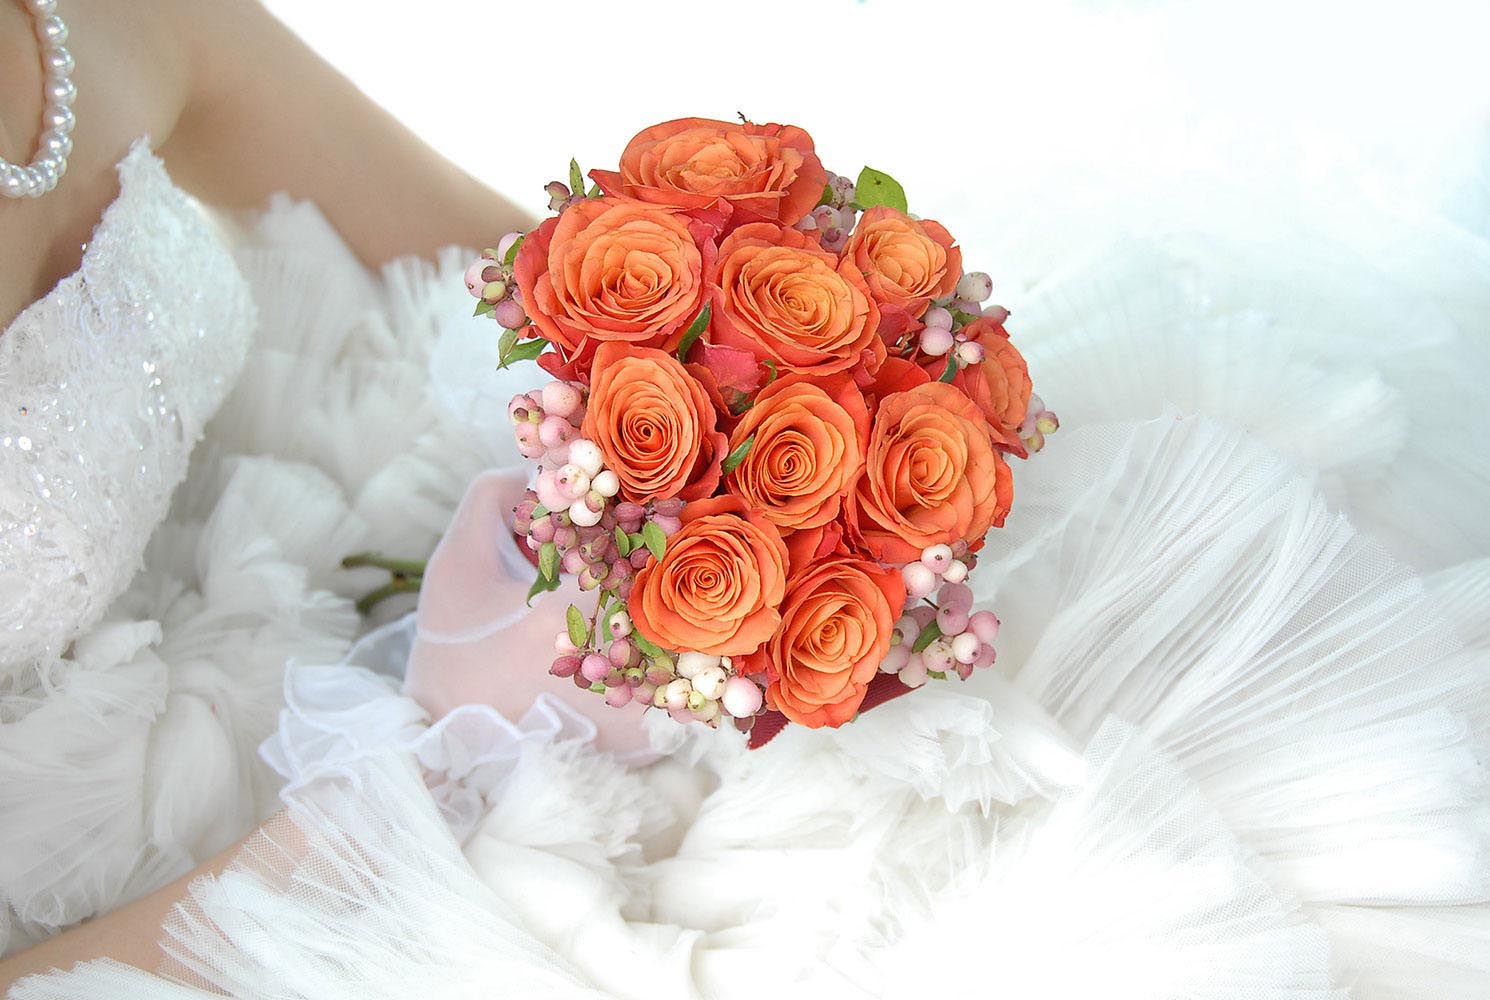 Bouquet de mariage orange tenue par la mariee sur sa robe